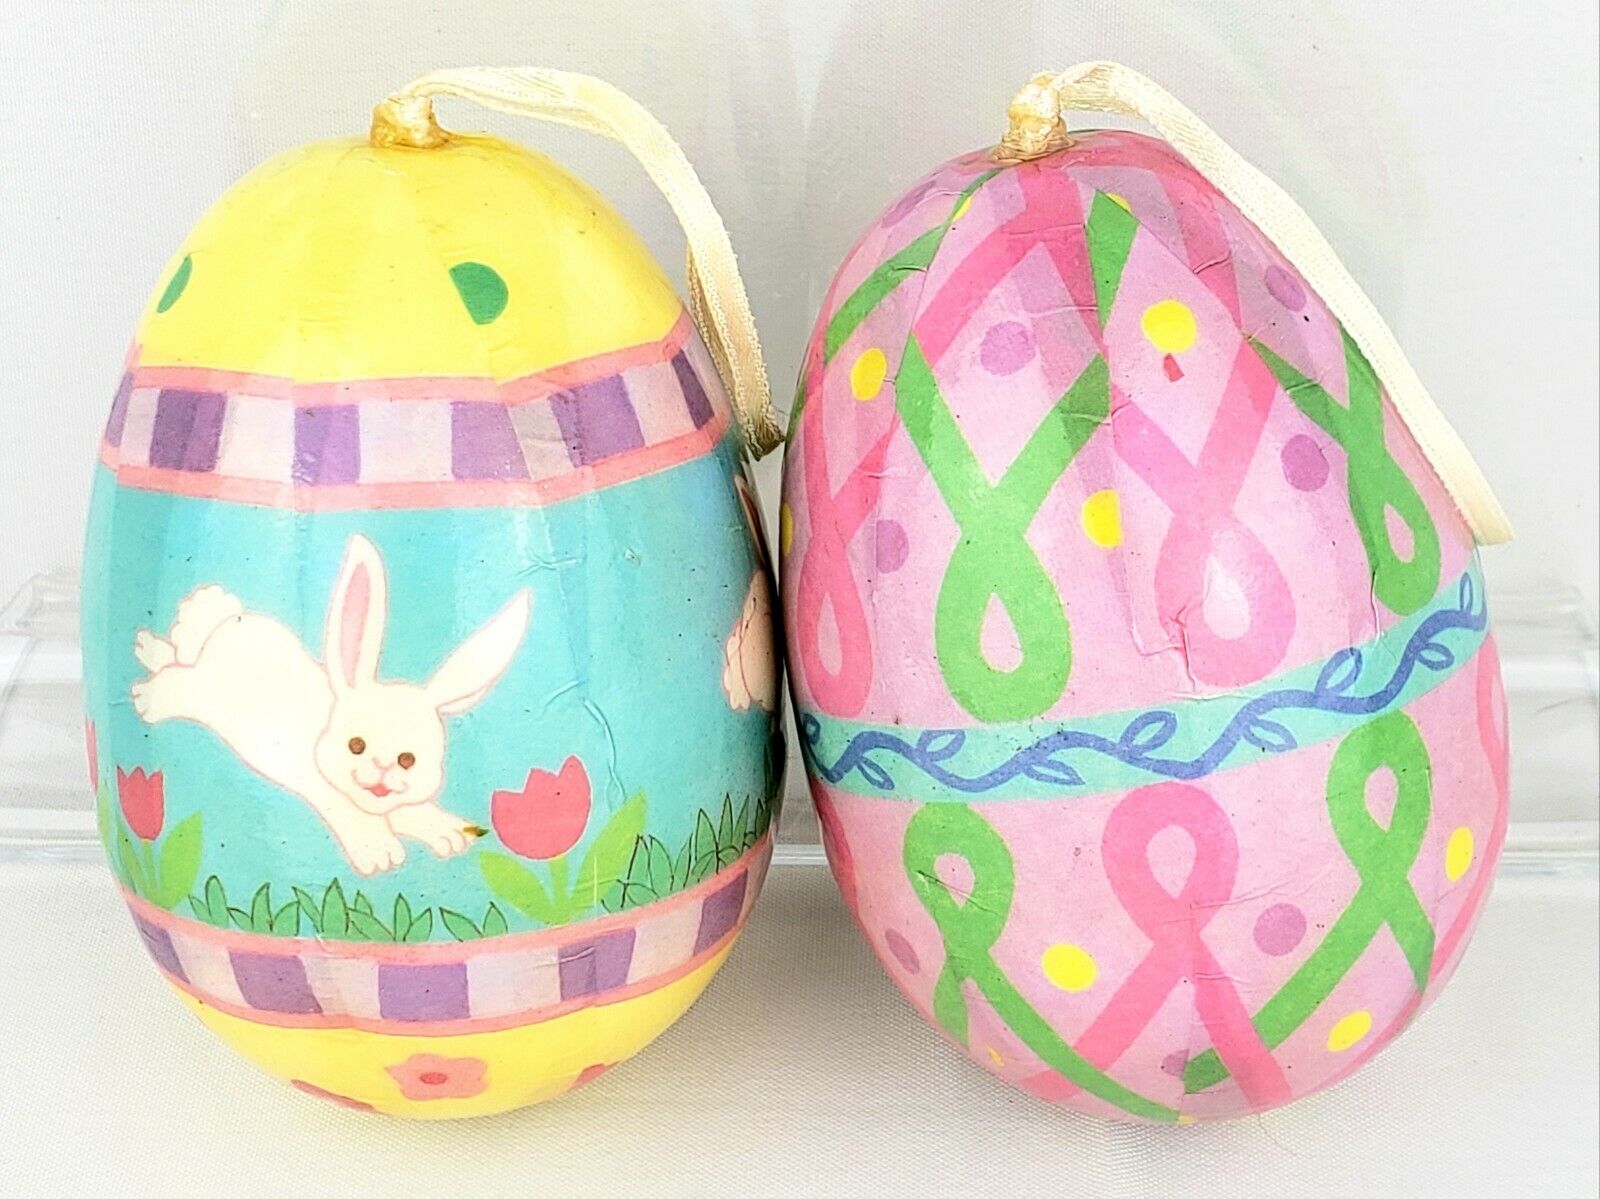 2 Papier-Mâché Easter bunny & breast cancer/mental health ribbon egg ornaments